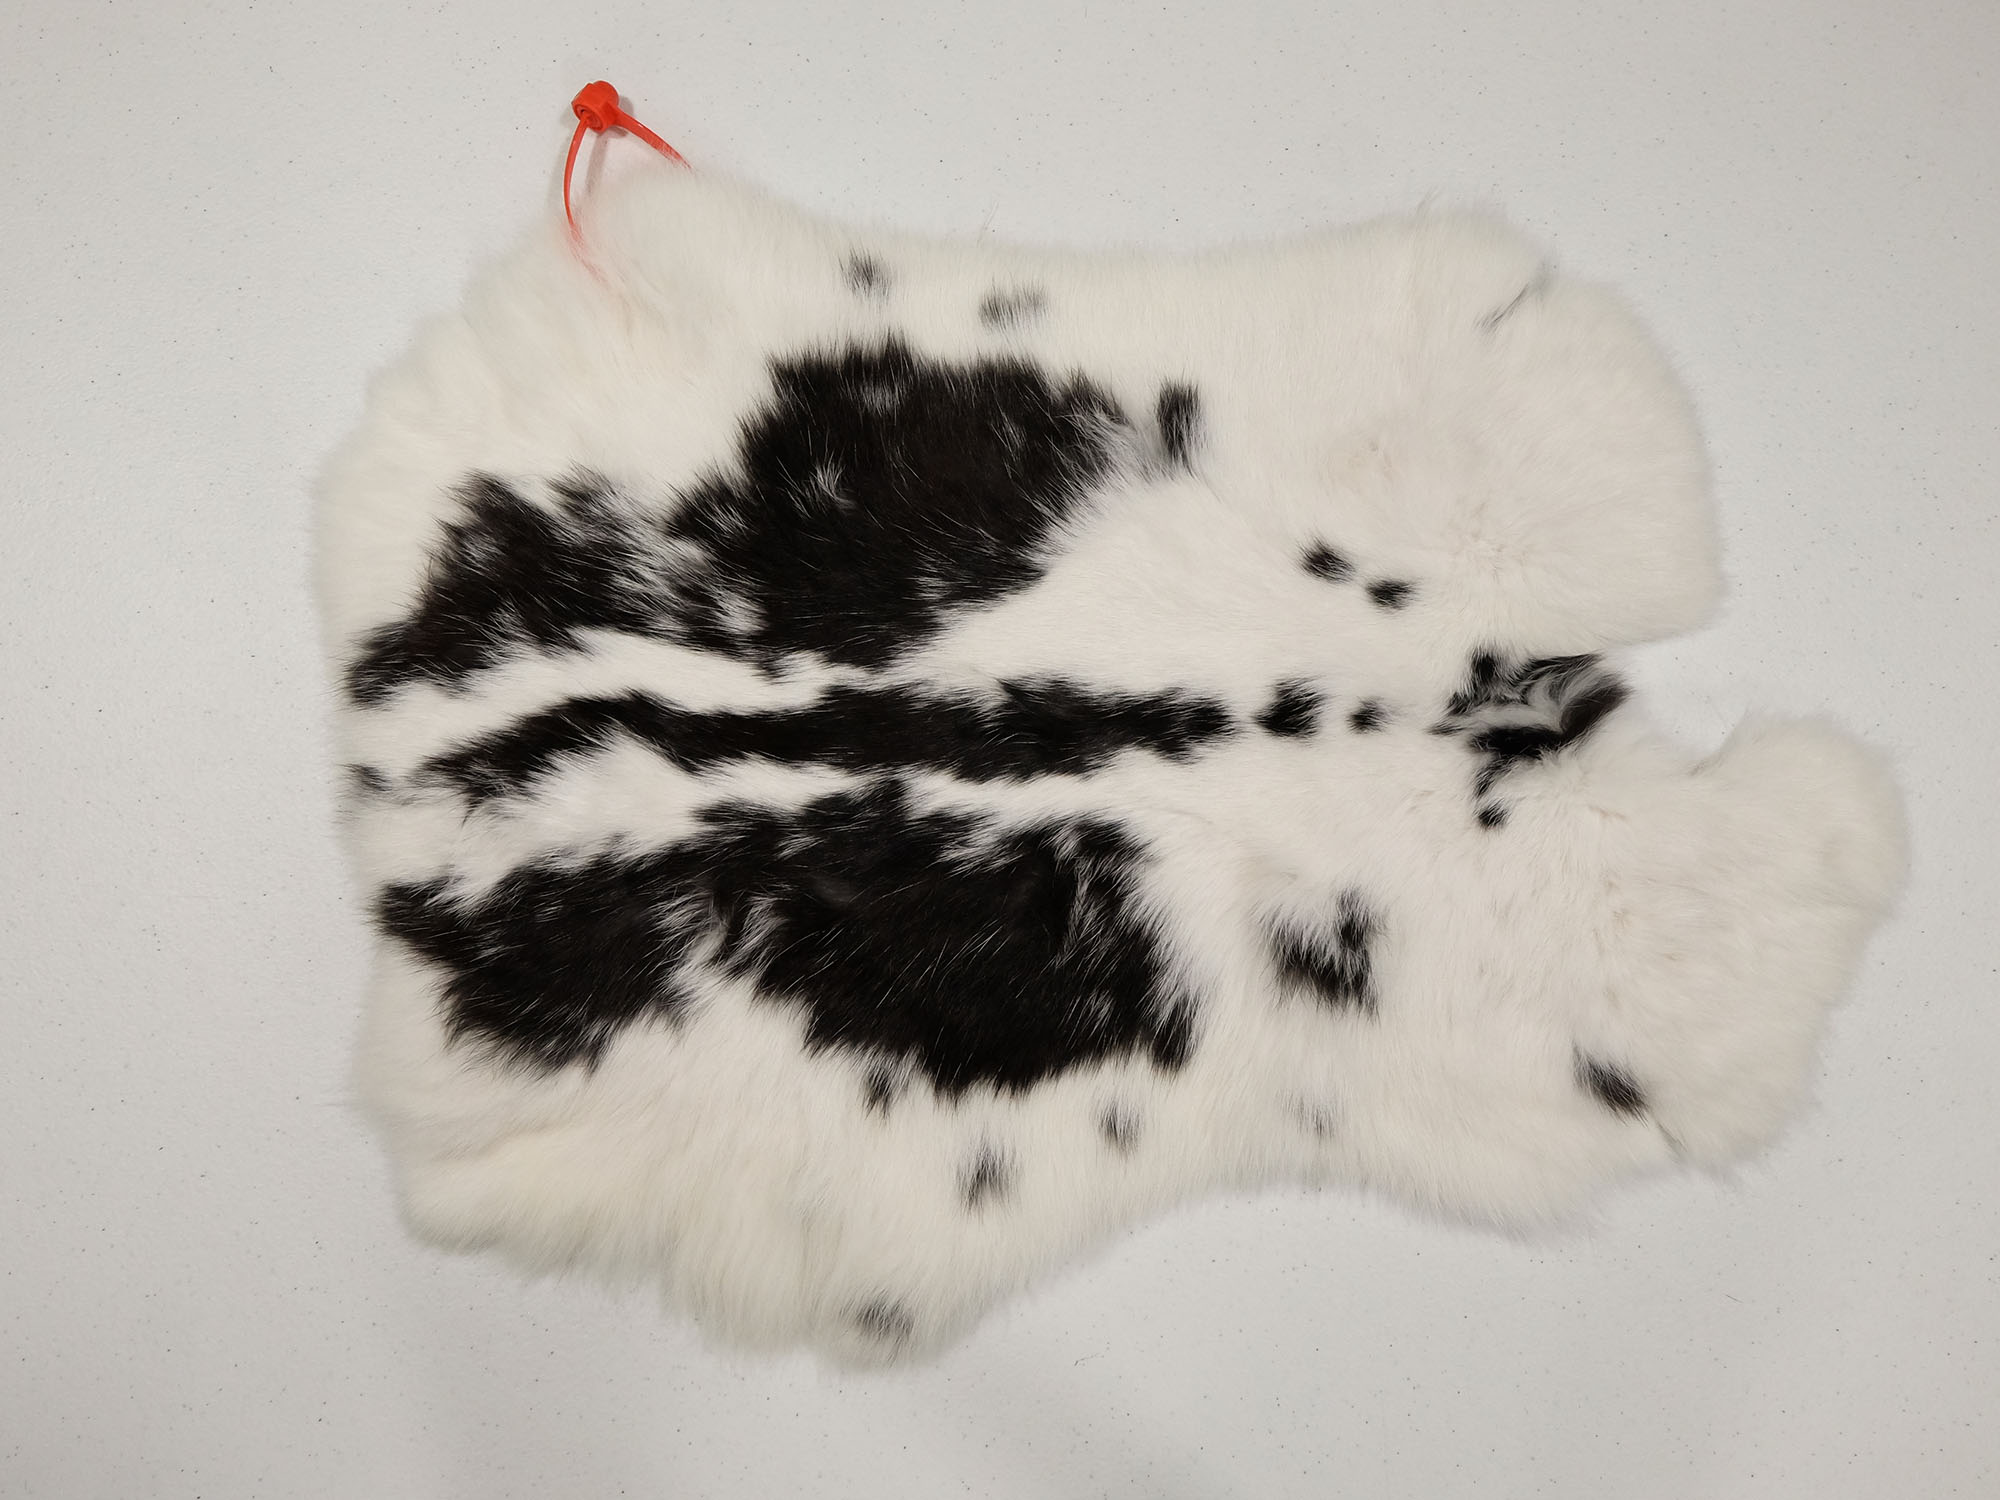 2 NATURAL RABBIT SKIN NEW WHITE COLOR fur pelt bunny tanned new rabbits skins 